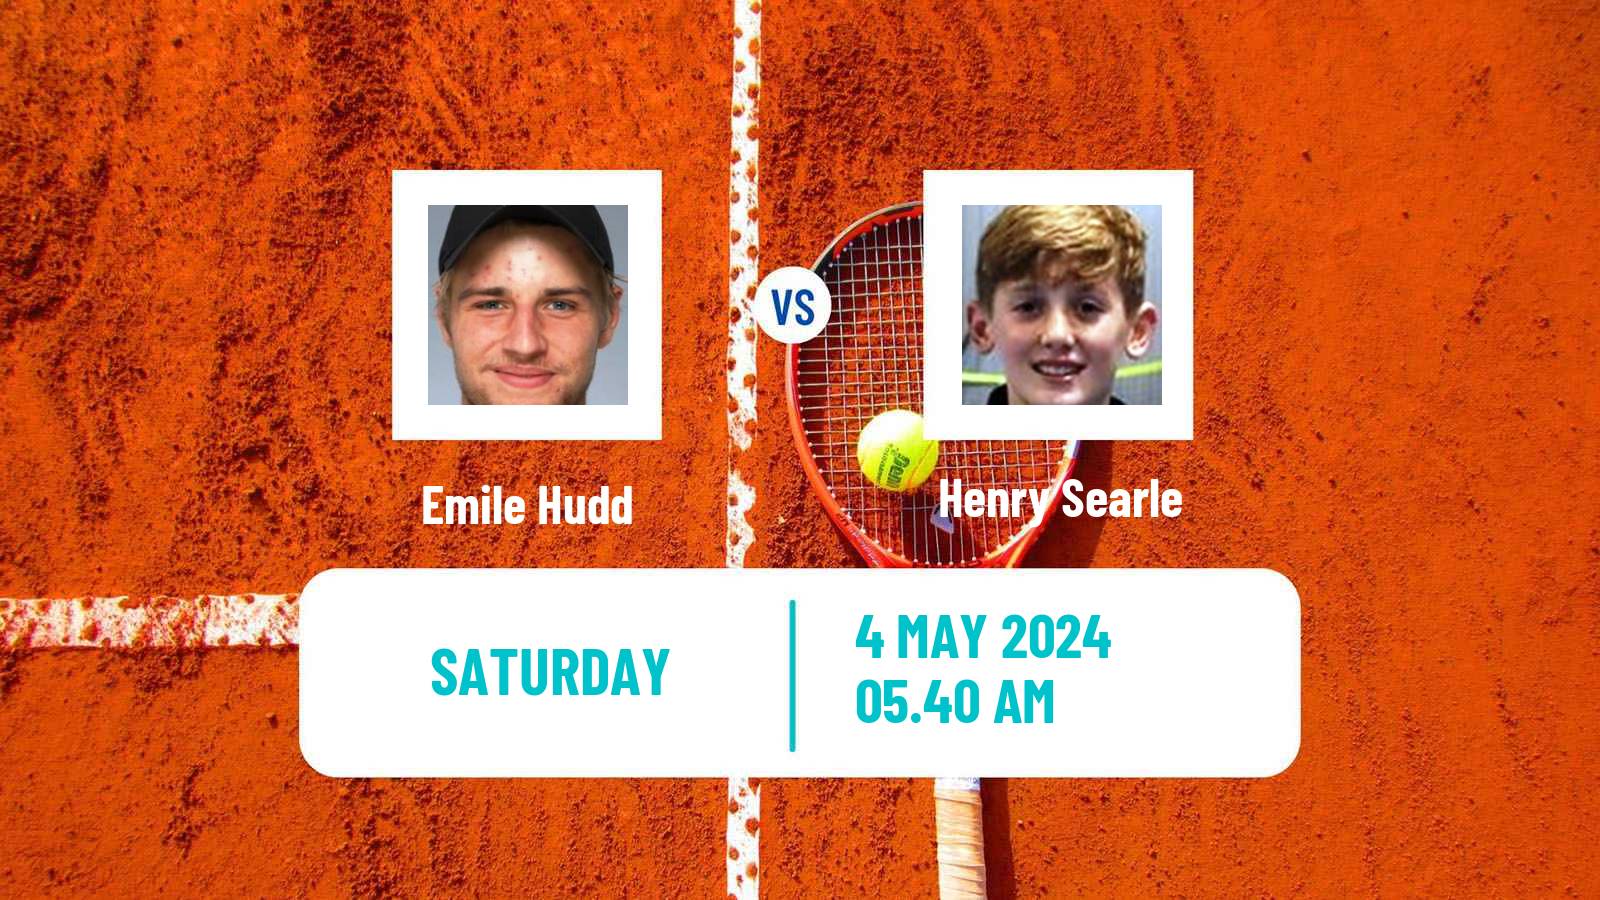 Tennis ITF M25 Nottingham 2 Men Emile Hudd - Henry Searle